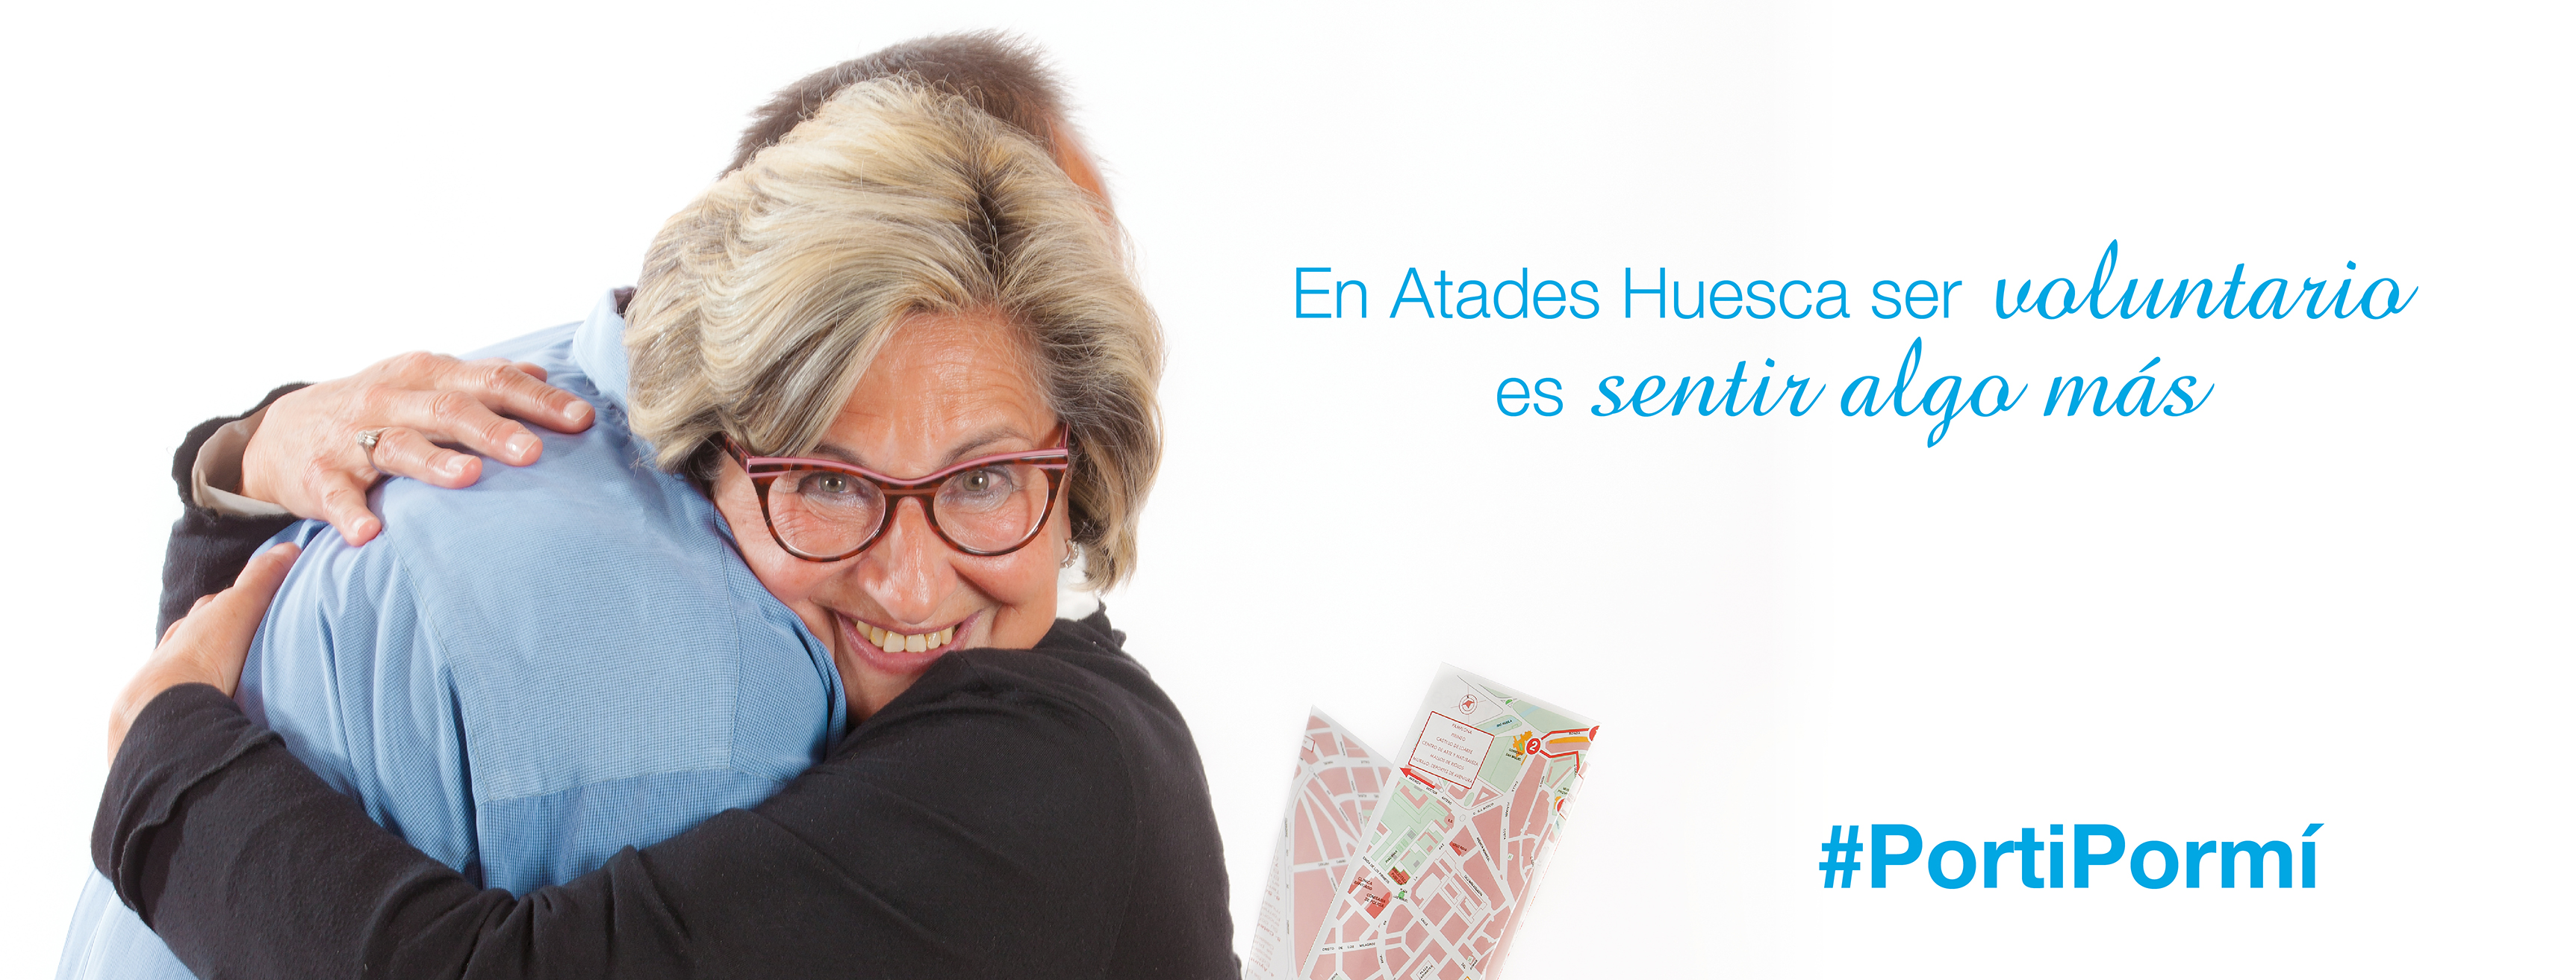 Atades-Huesca-Voluntariado